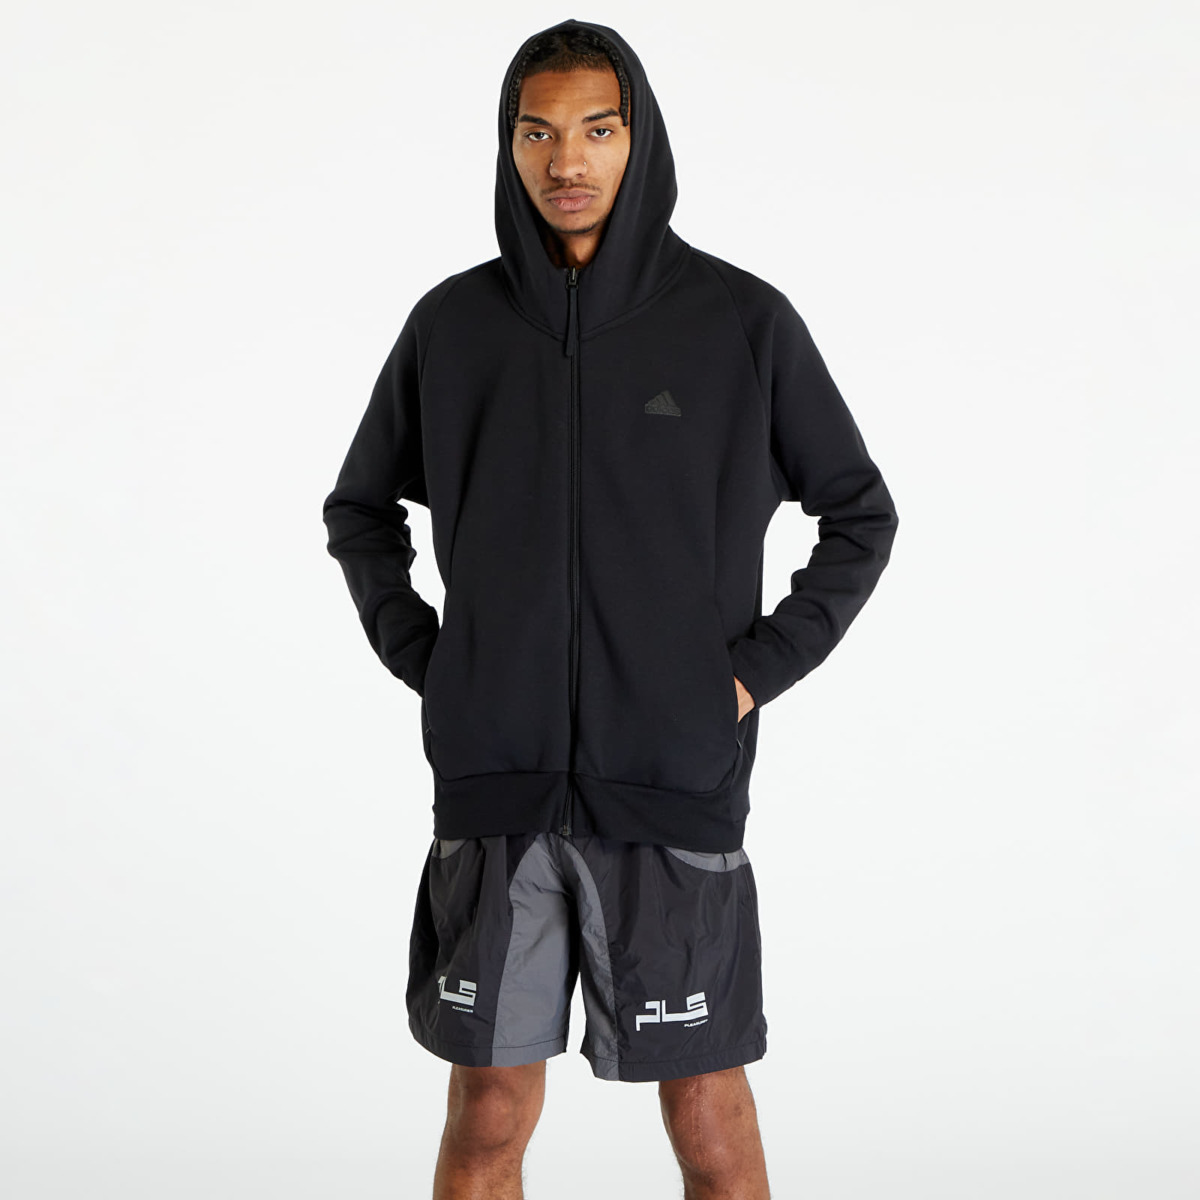 Adidas - Jacket Black for Man at Footshop GOOFASH